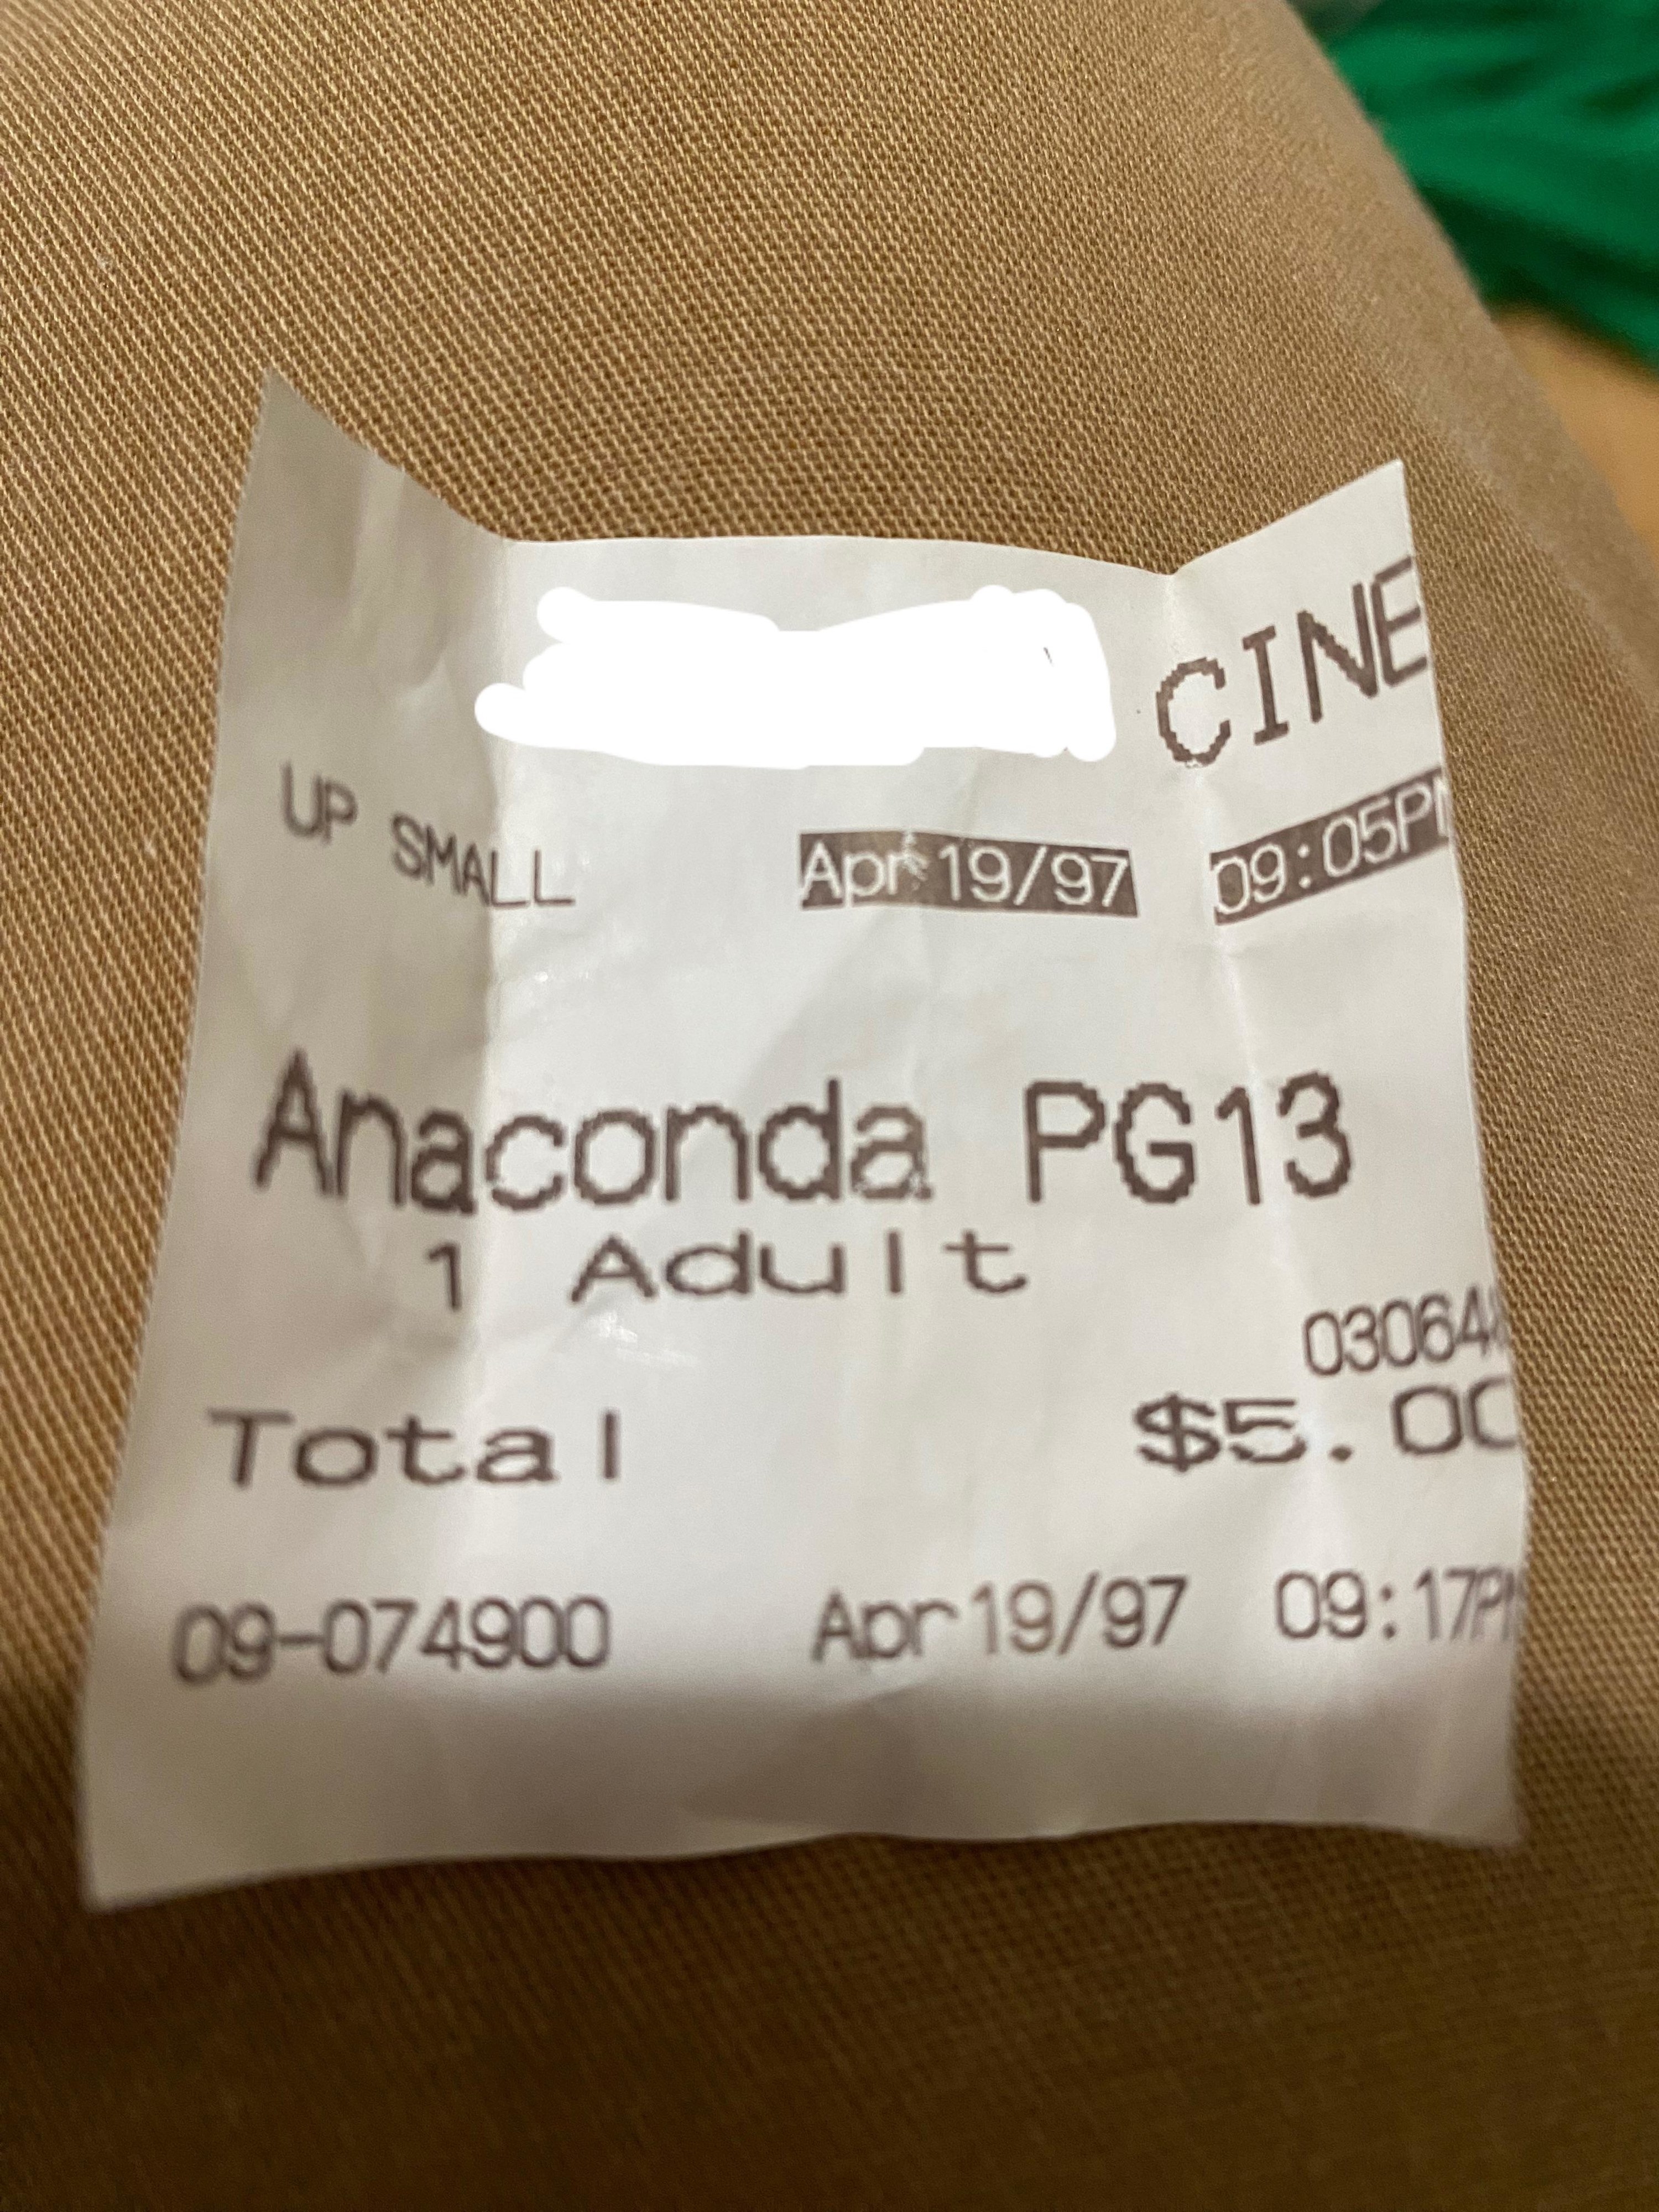 A movie ticket stub